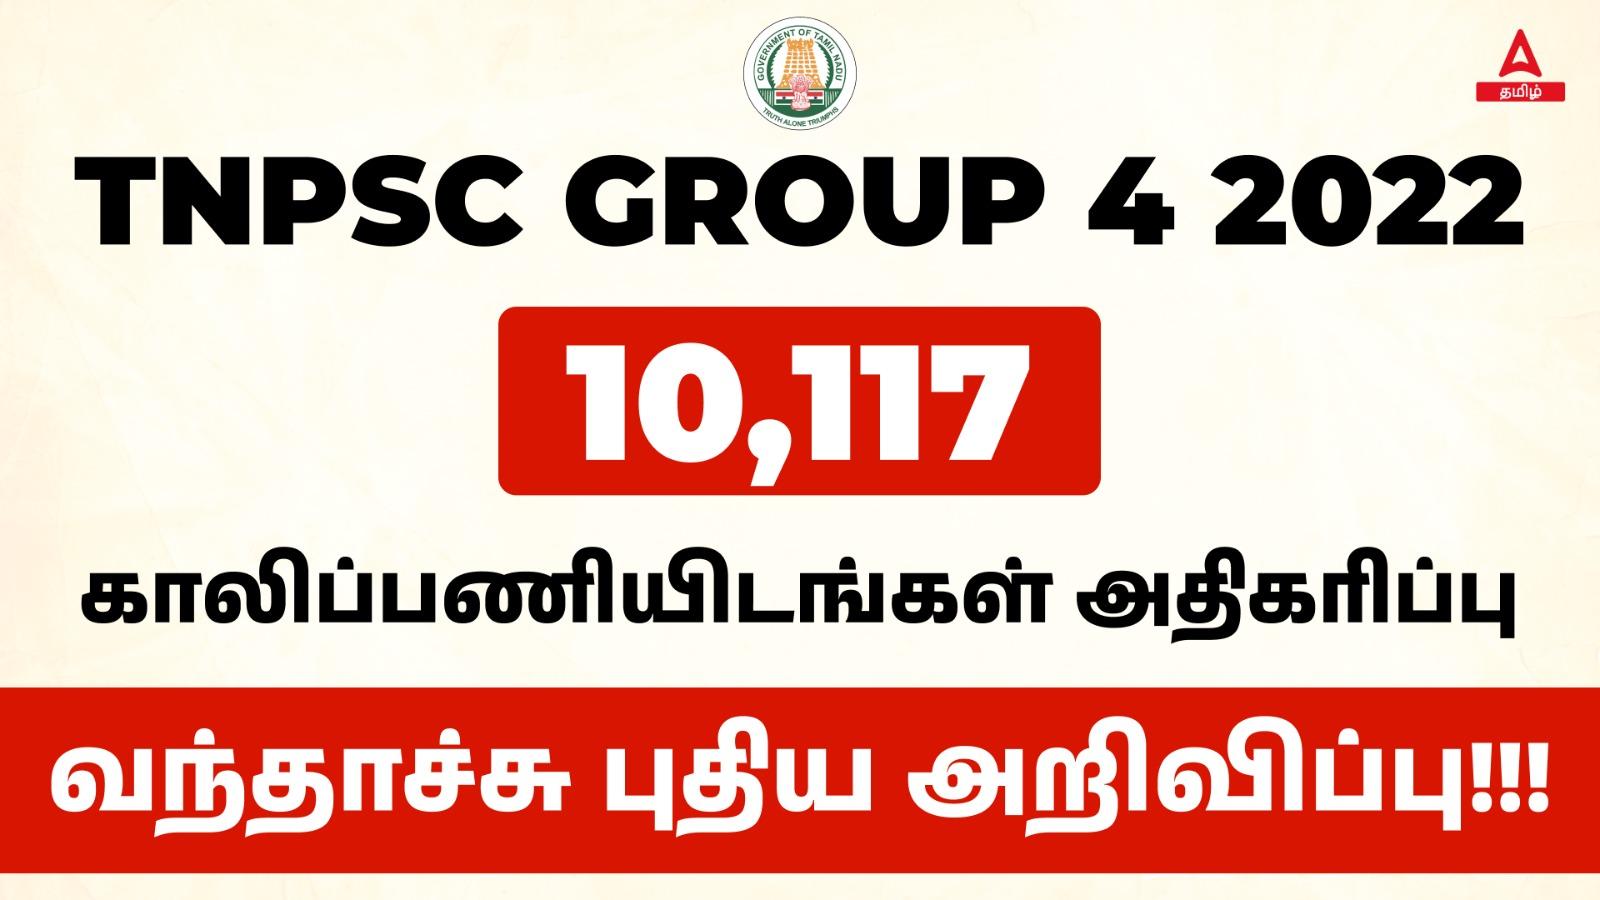 TNPSC Group 4 Vacancy Increased, Check Revised Vacancy_30.1